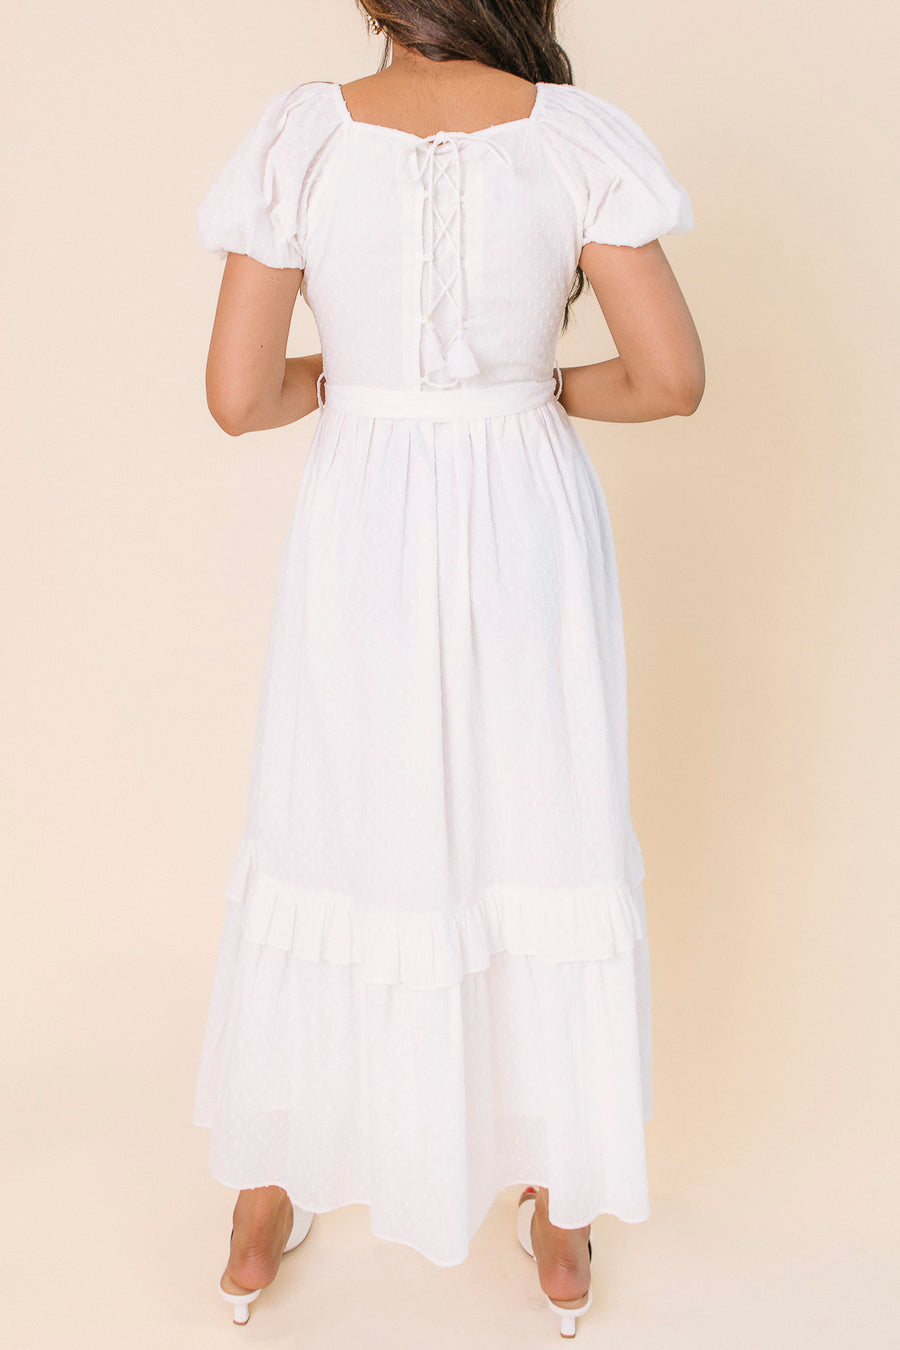 Antoinette Dress in White - FINAL SALE – Ivy City Co